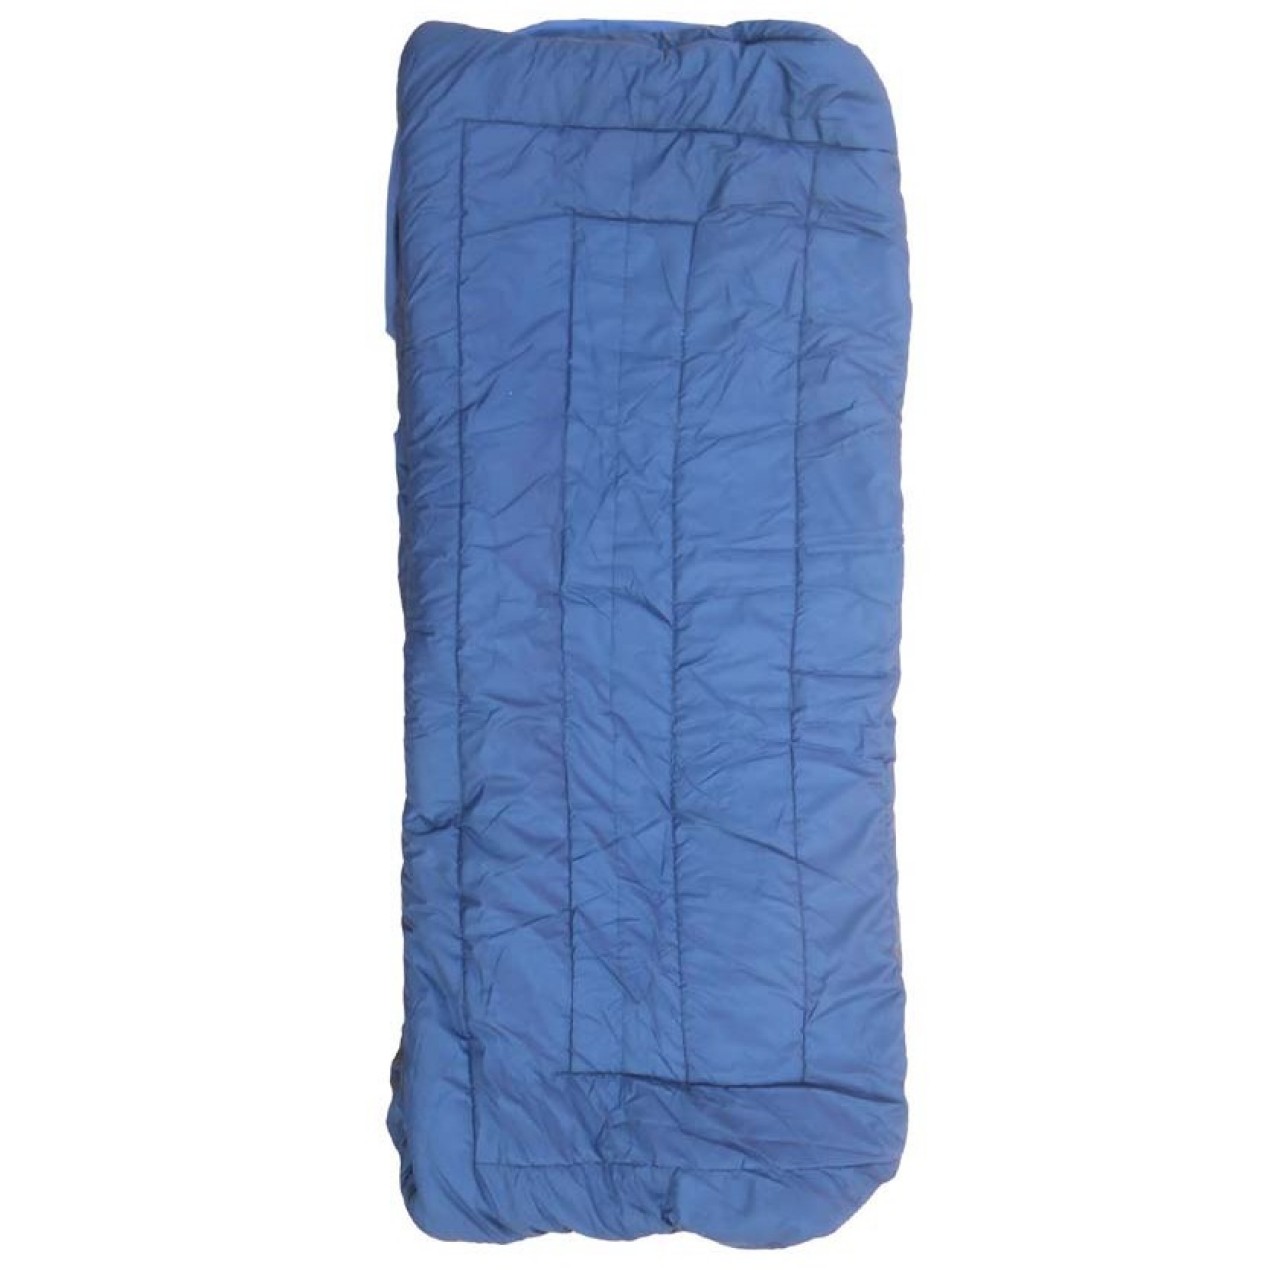 Shandur Sleeping bag - Large - Navy Blue